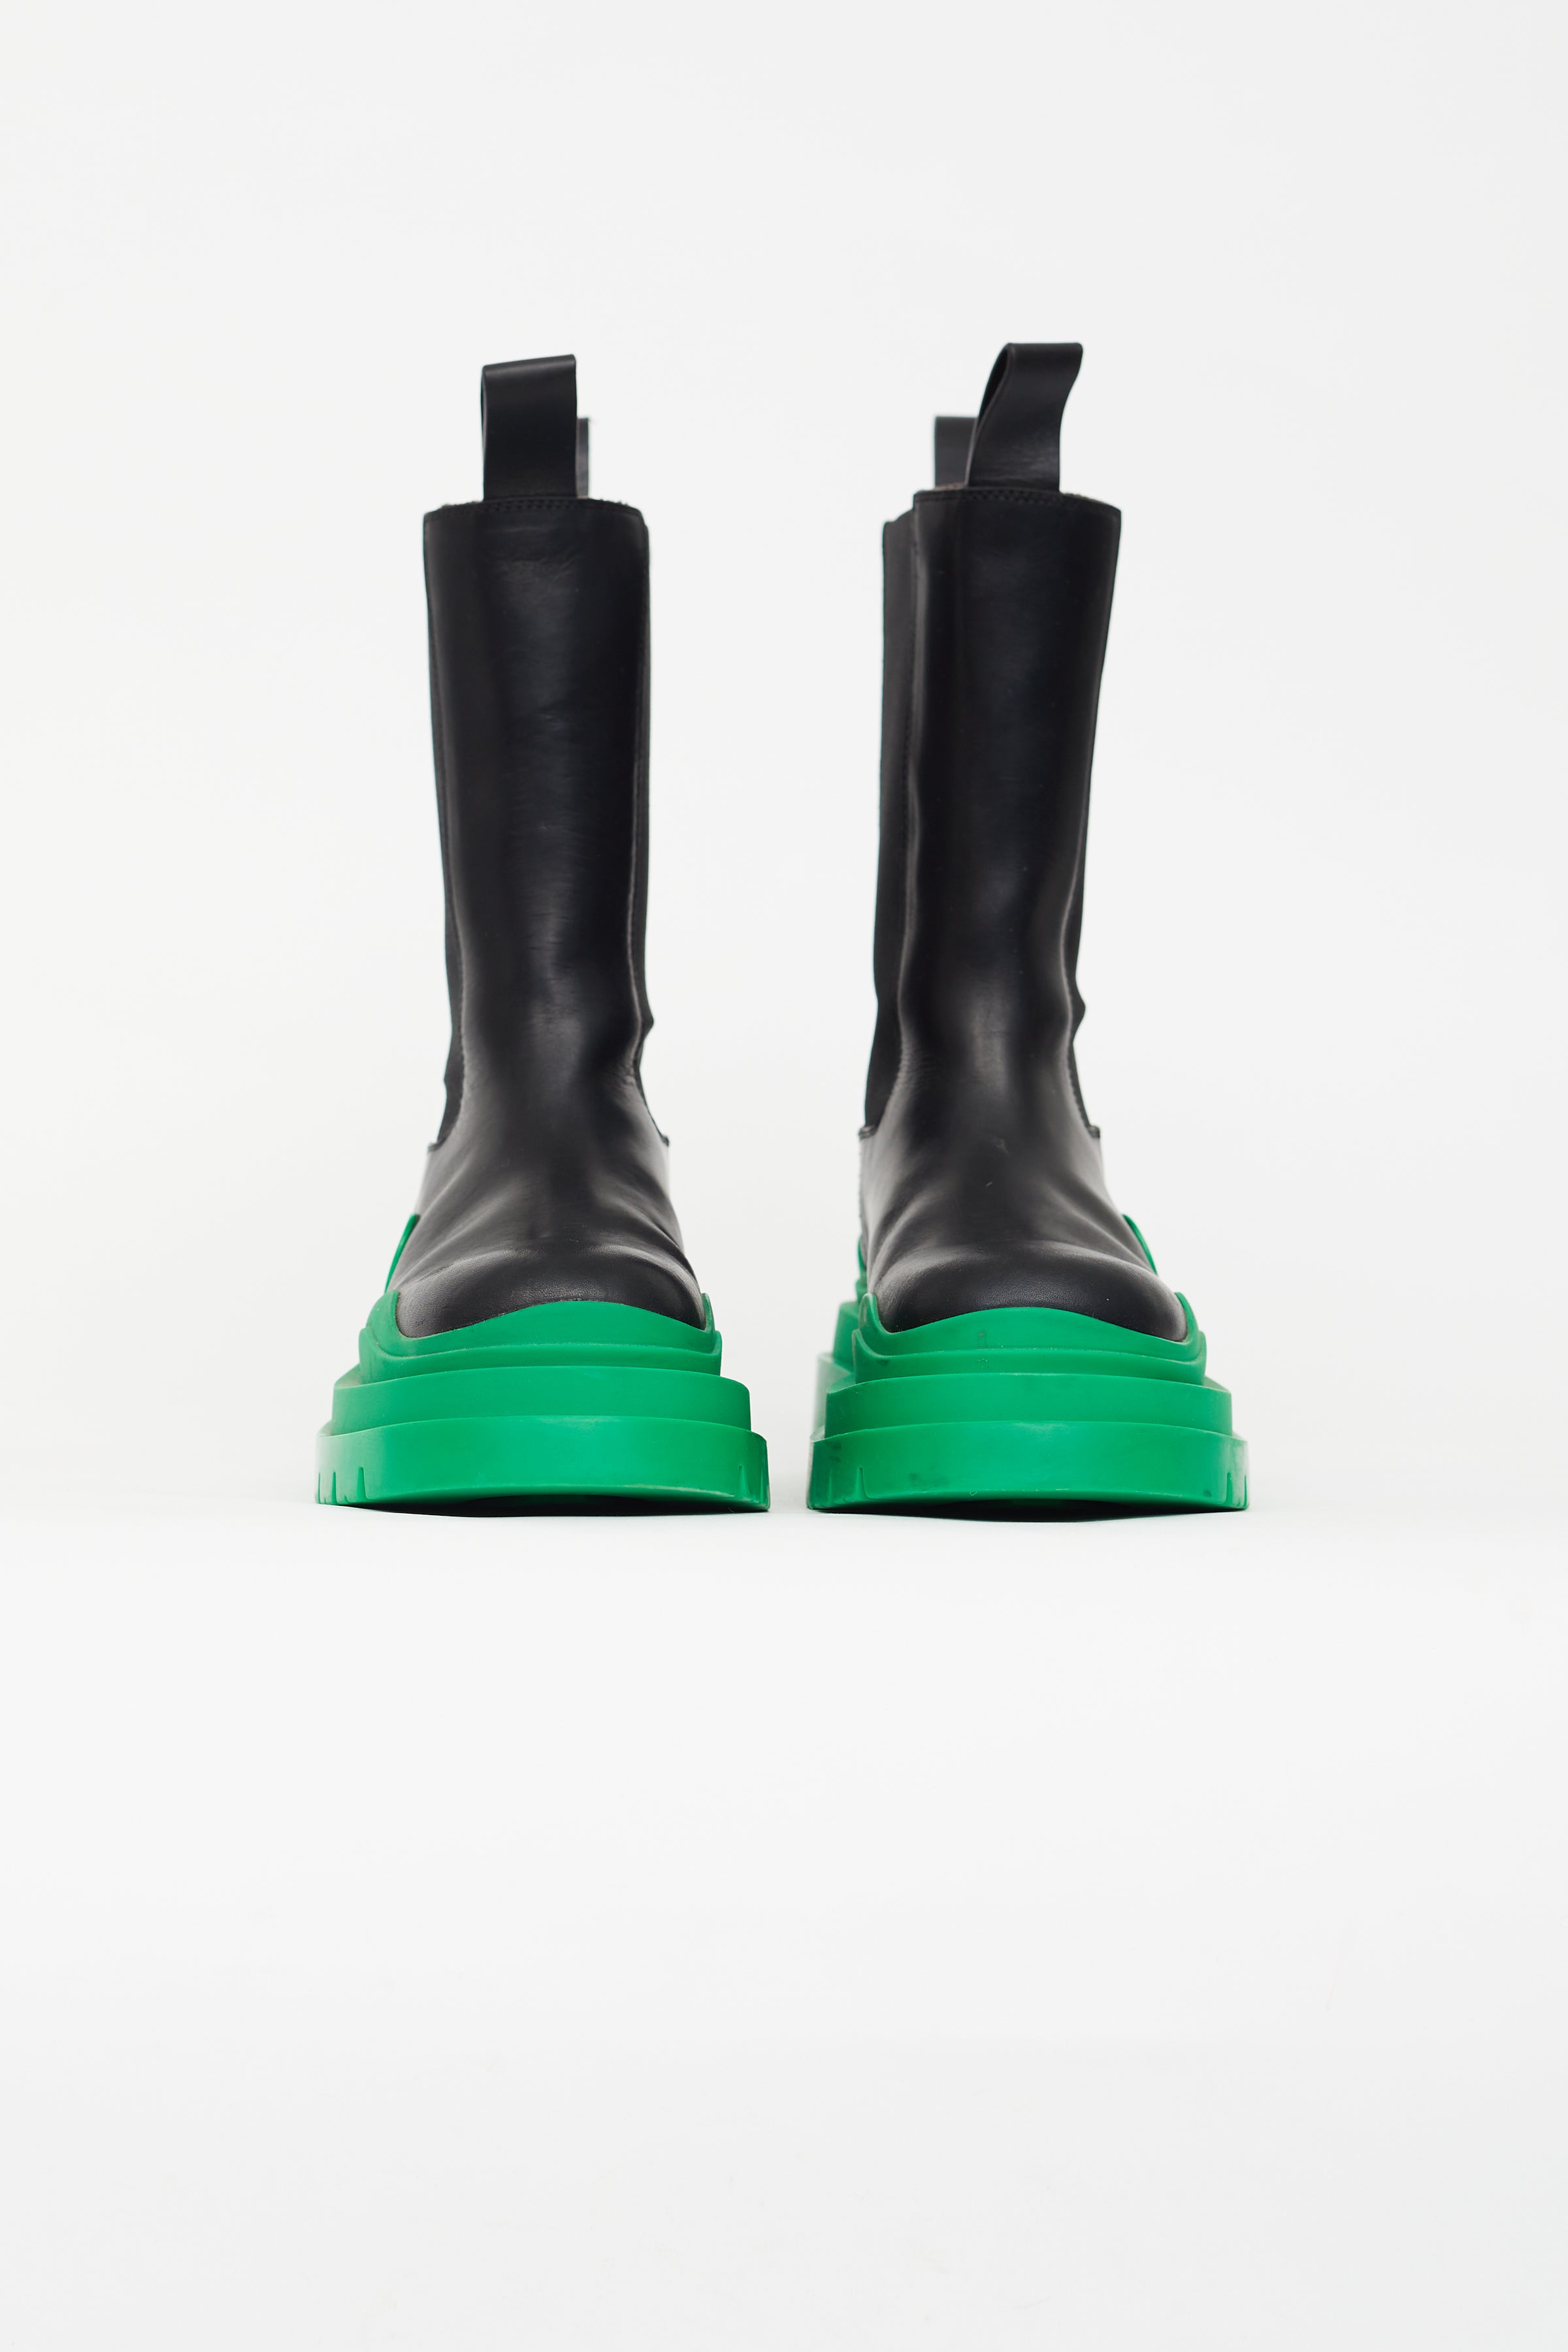 Bottega Veneta Leather Boots 'BV Tire' Green/Black